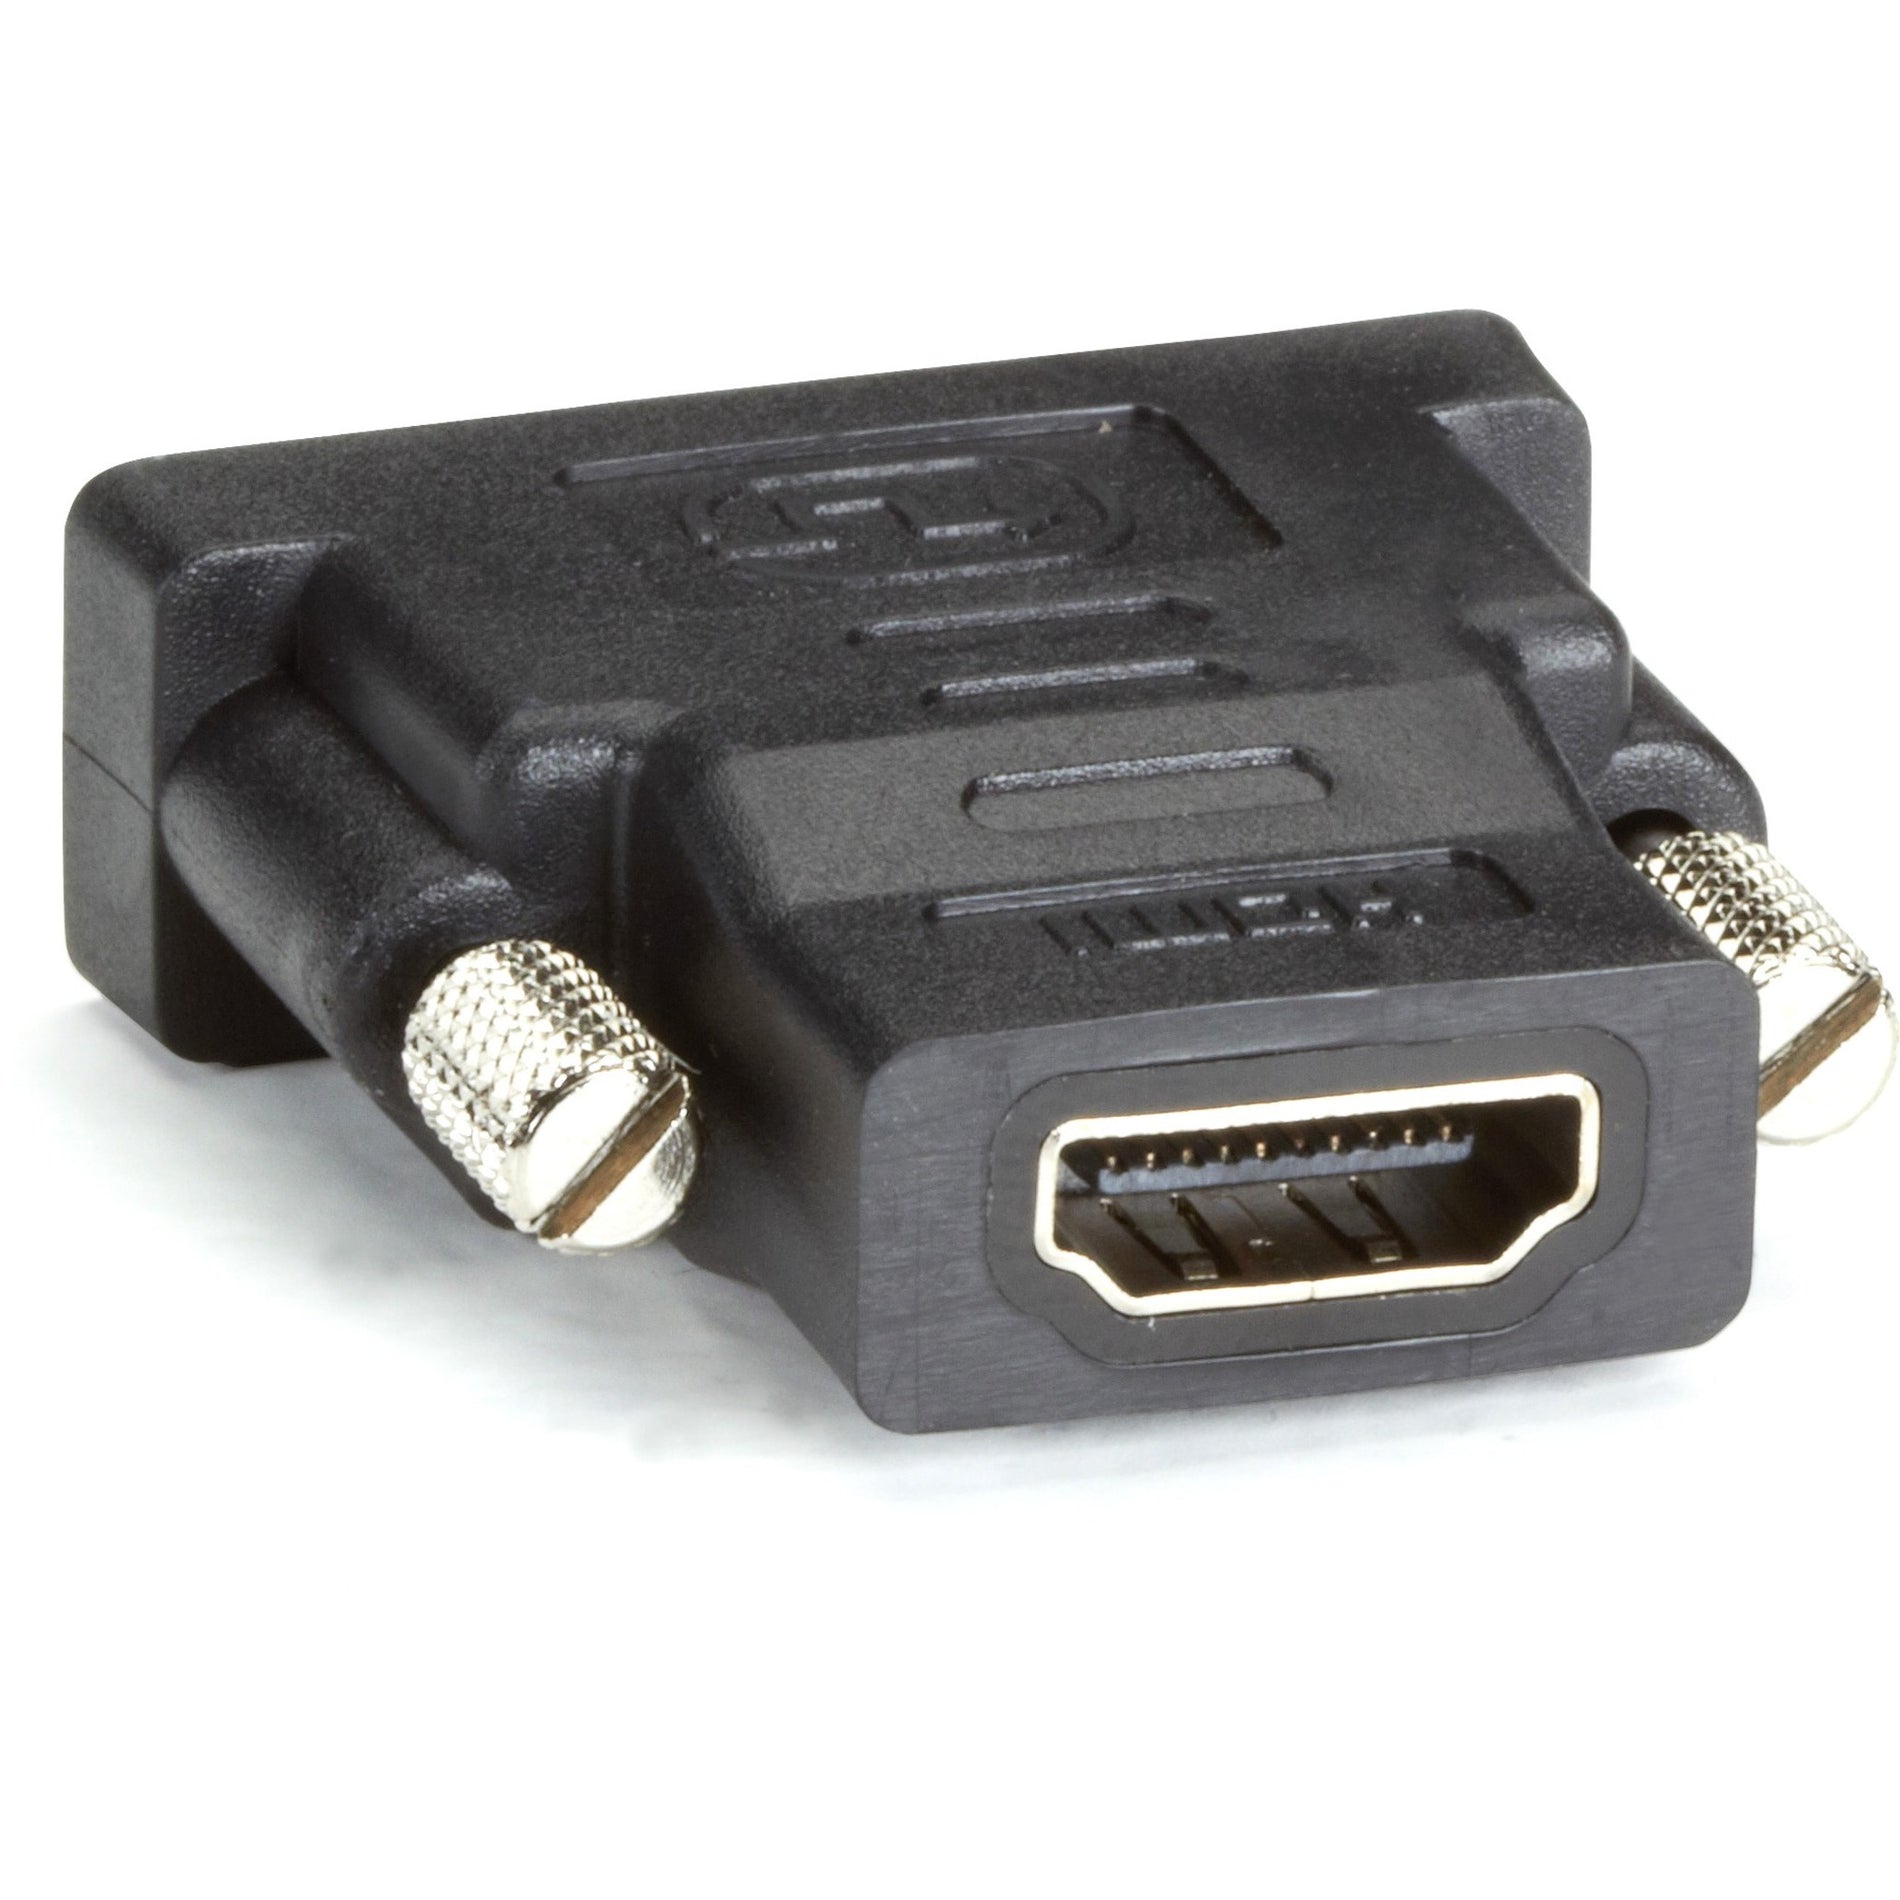 Adaptateur HDMI vers DVI-D Black Box FA795-R2 moulé nickel plaqué garantie à vie